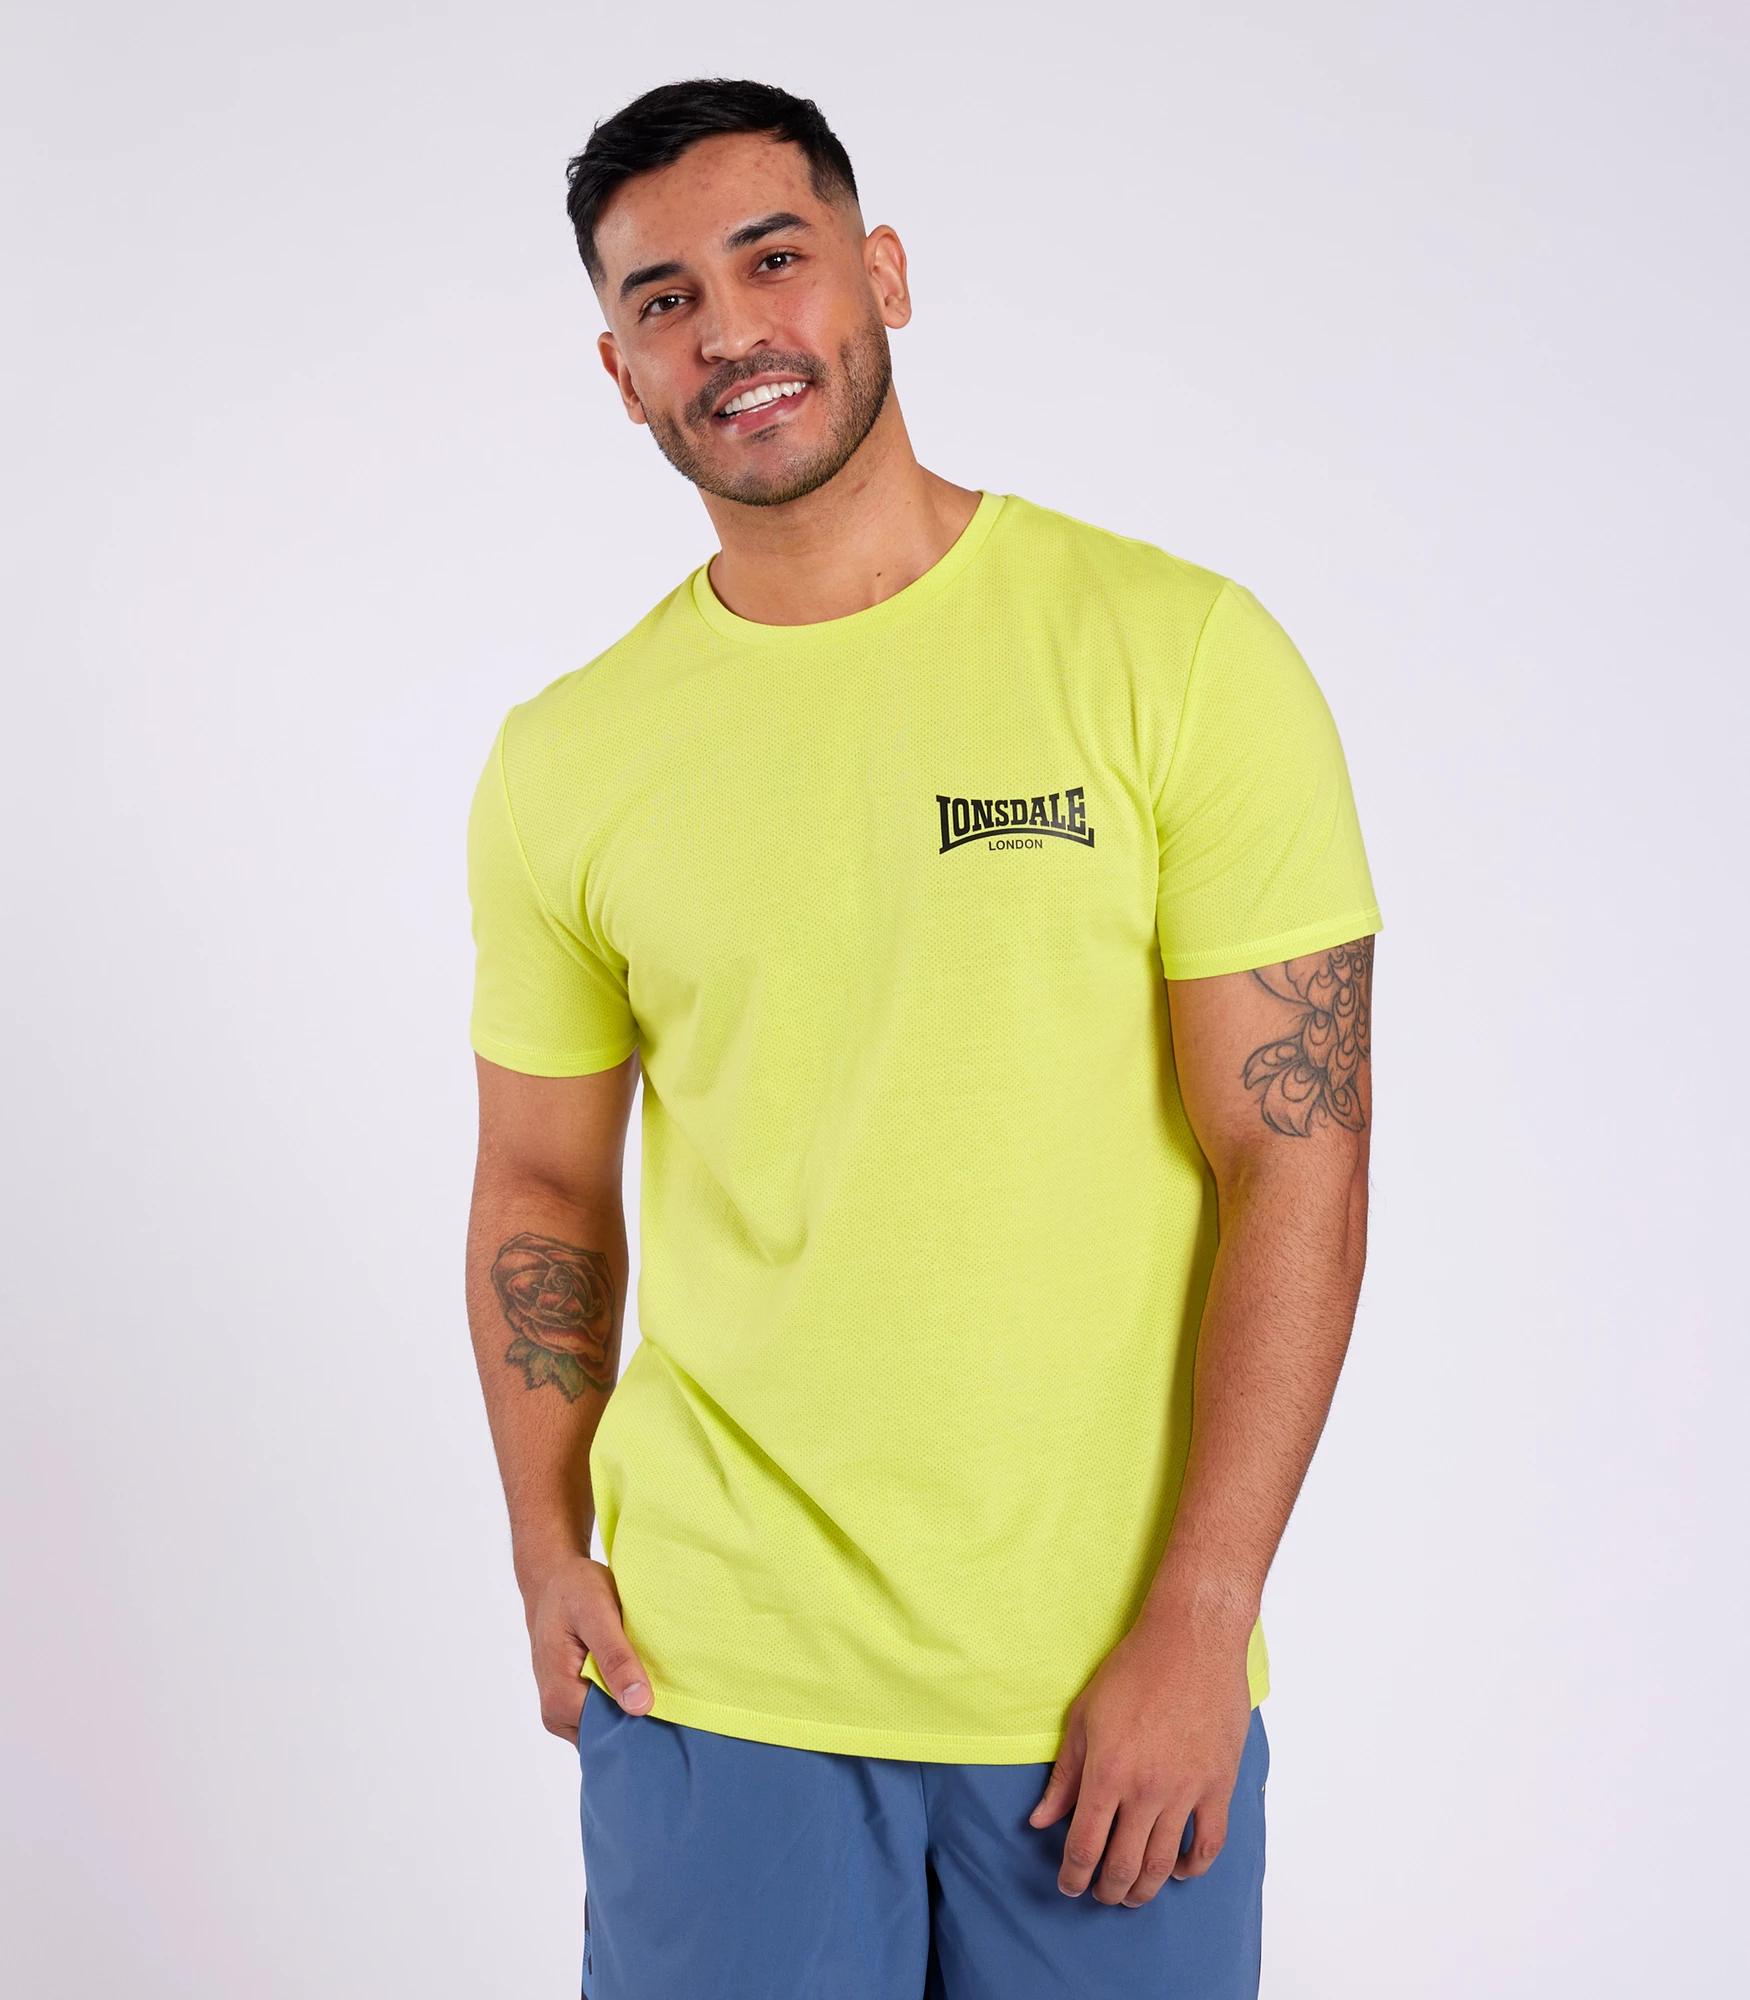 Lonsdale London Backley T-Shirt Target Australia